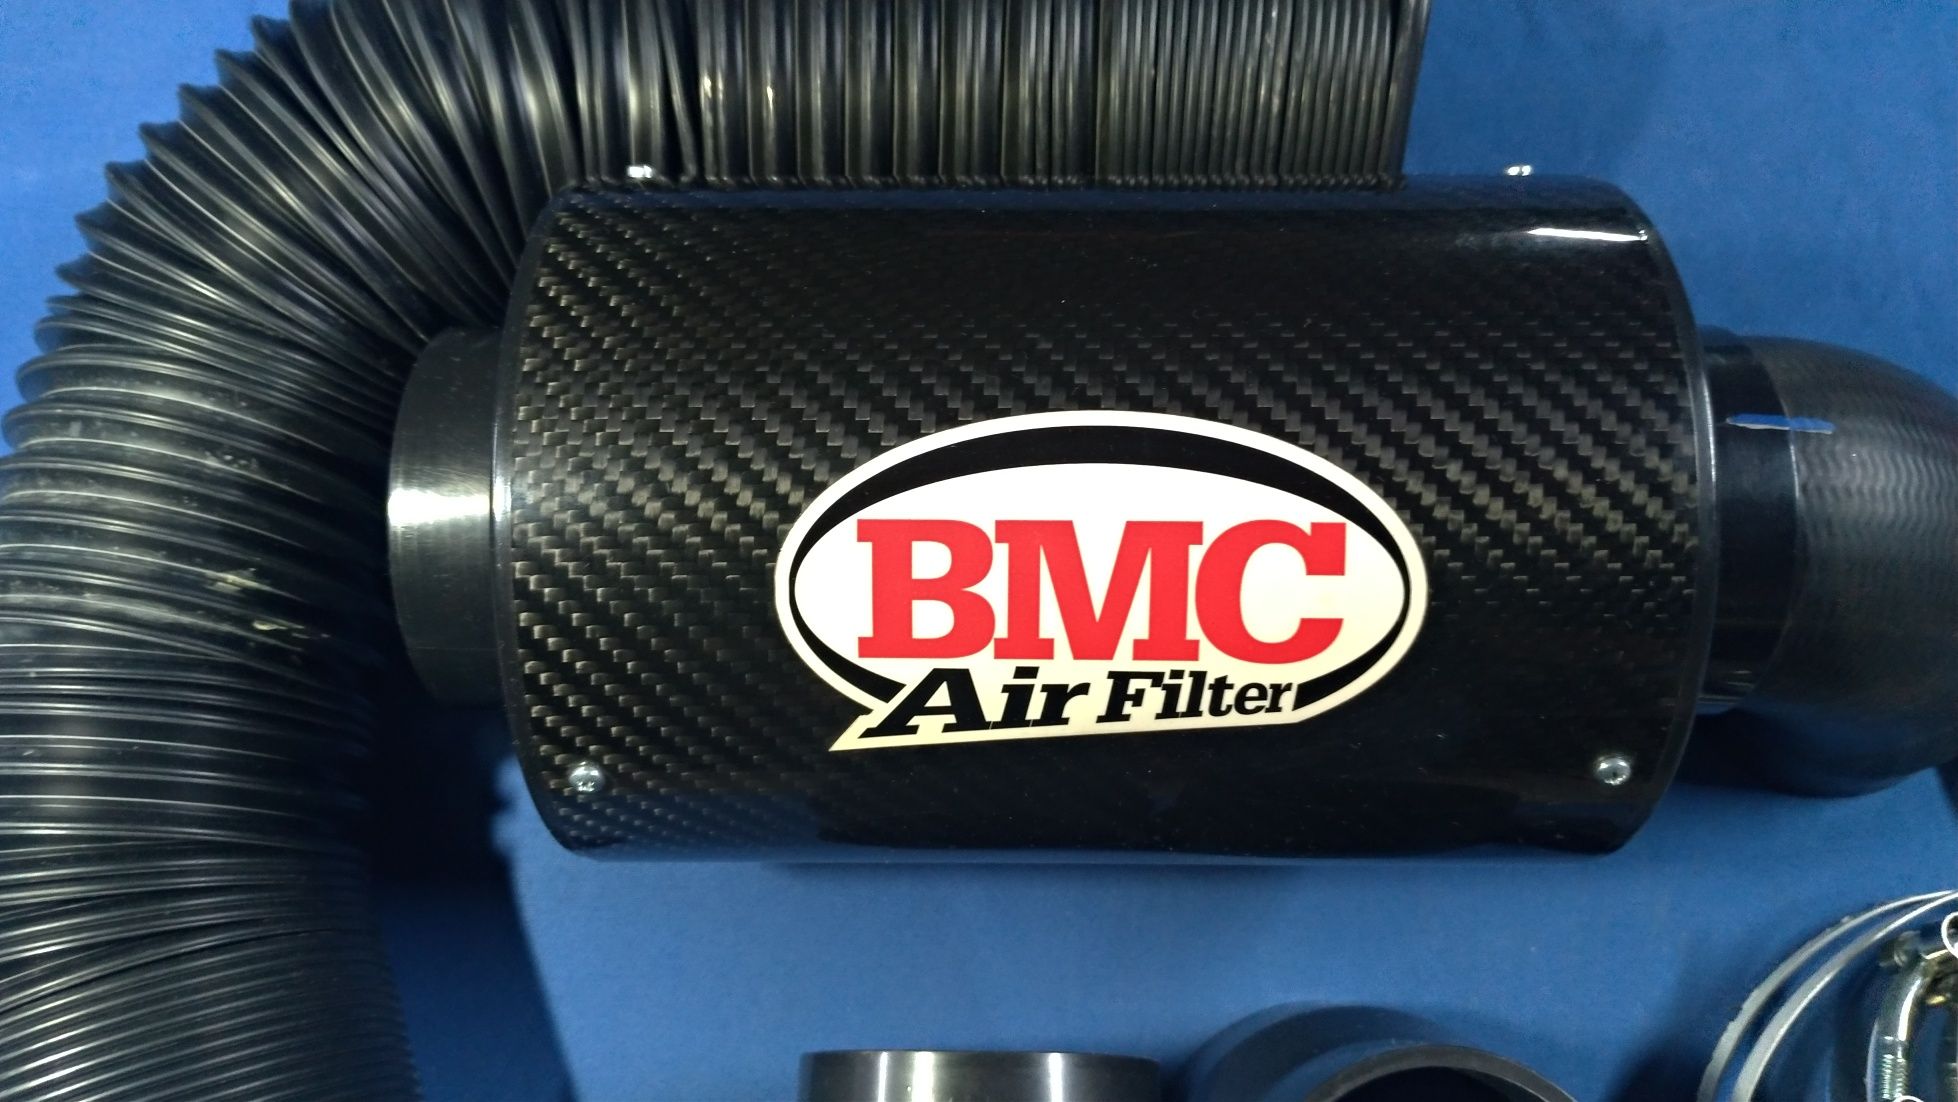 BMC AIR FILTER (replica)